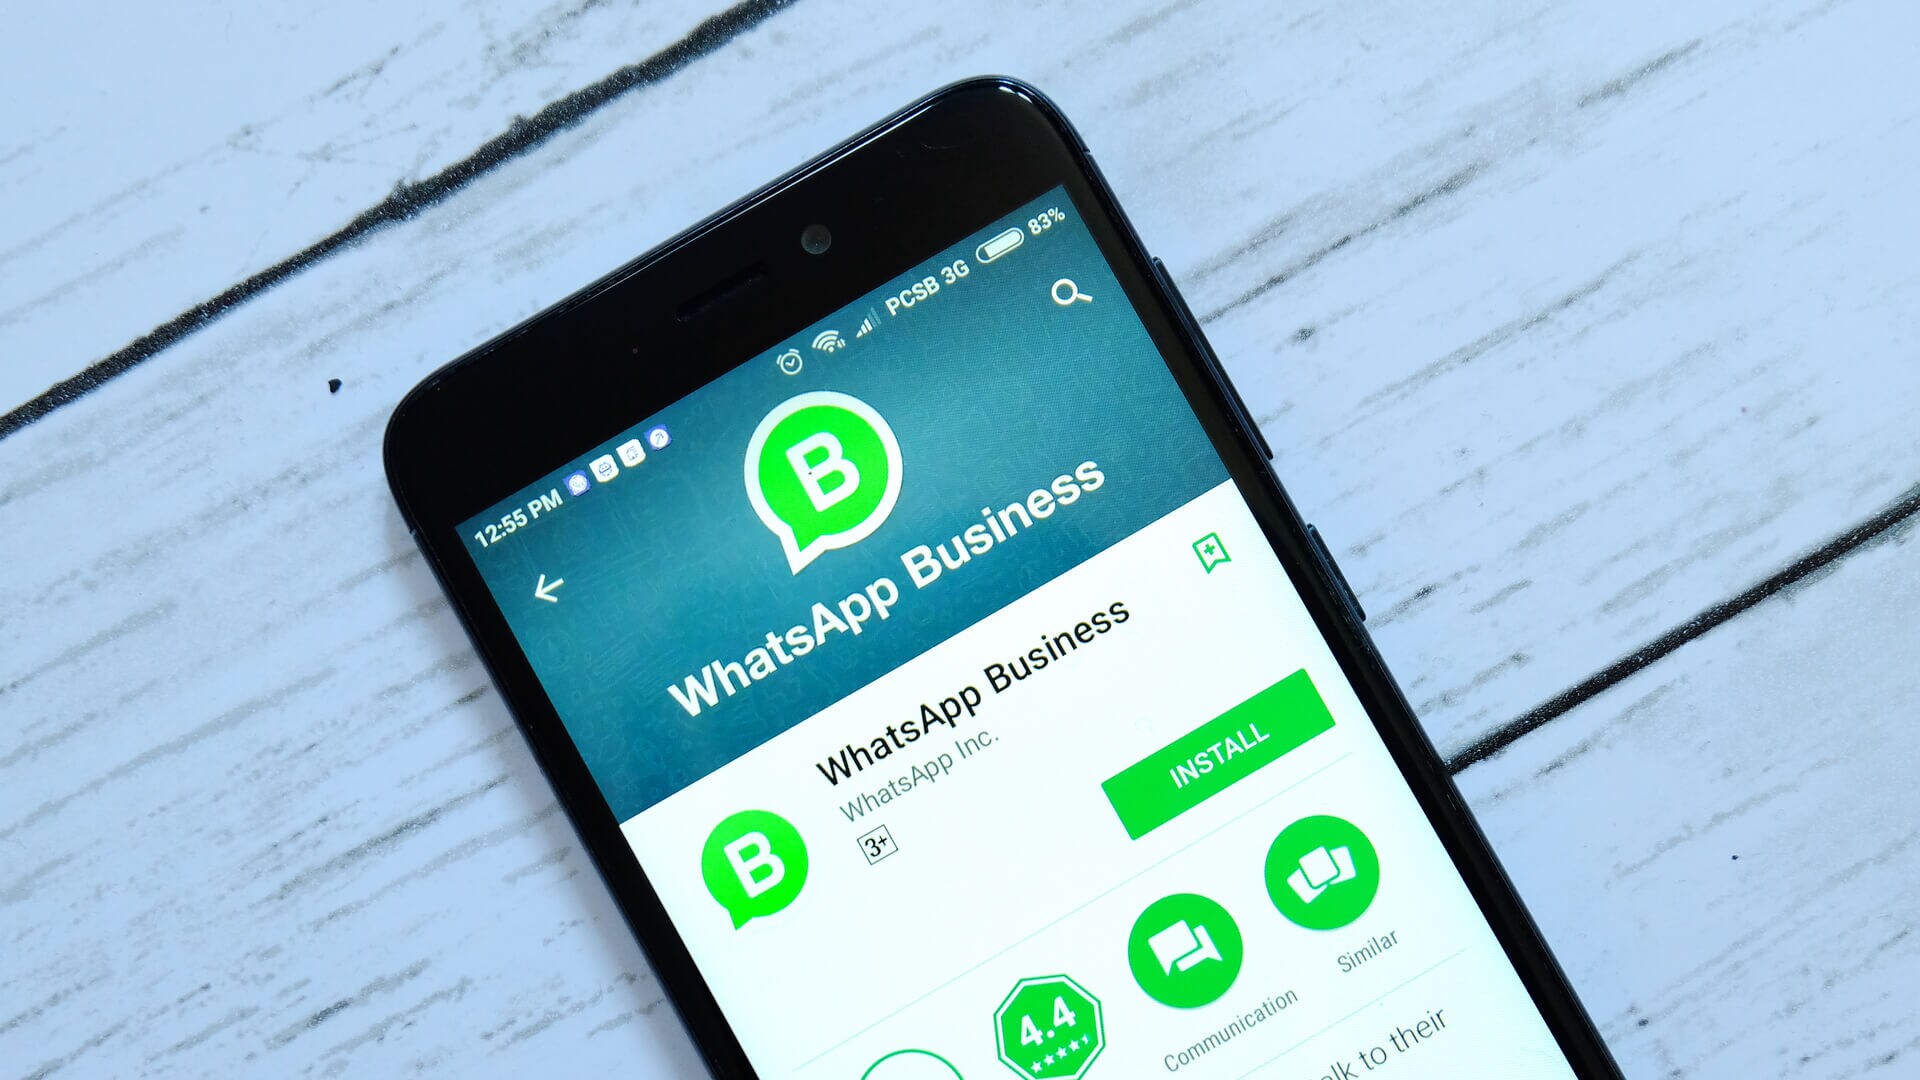 install whatsapp business